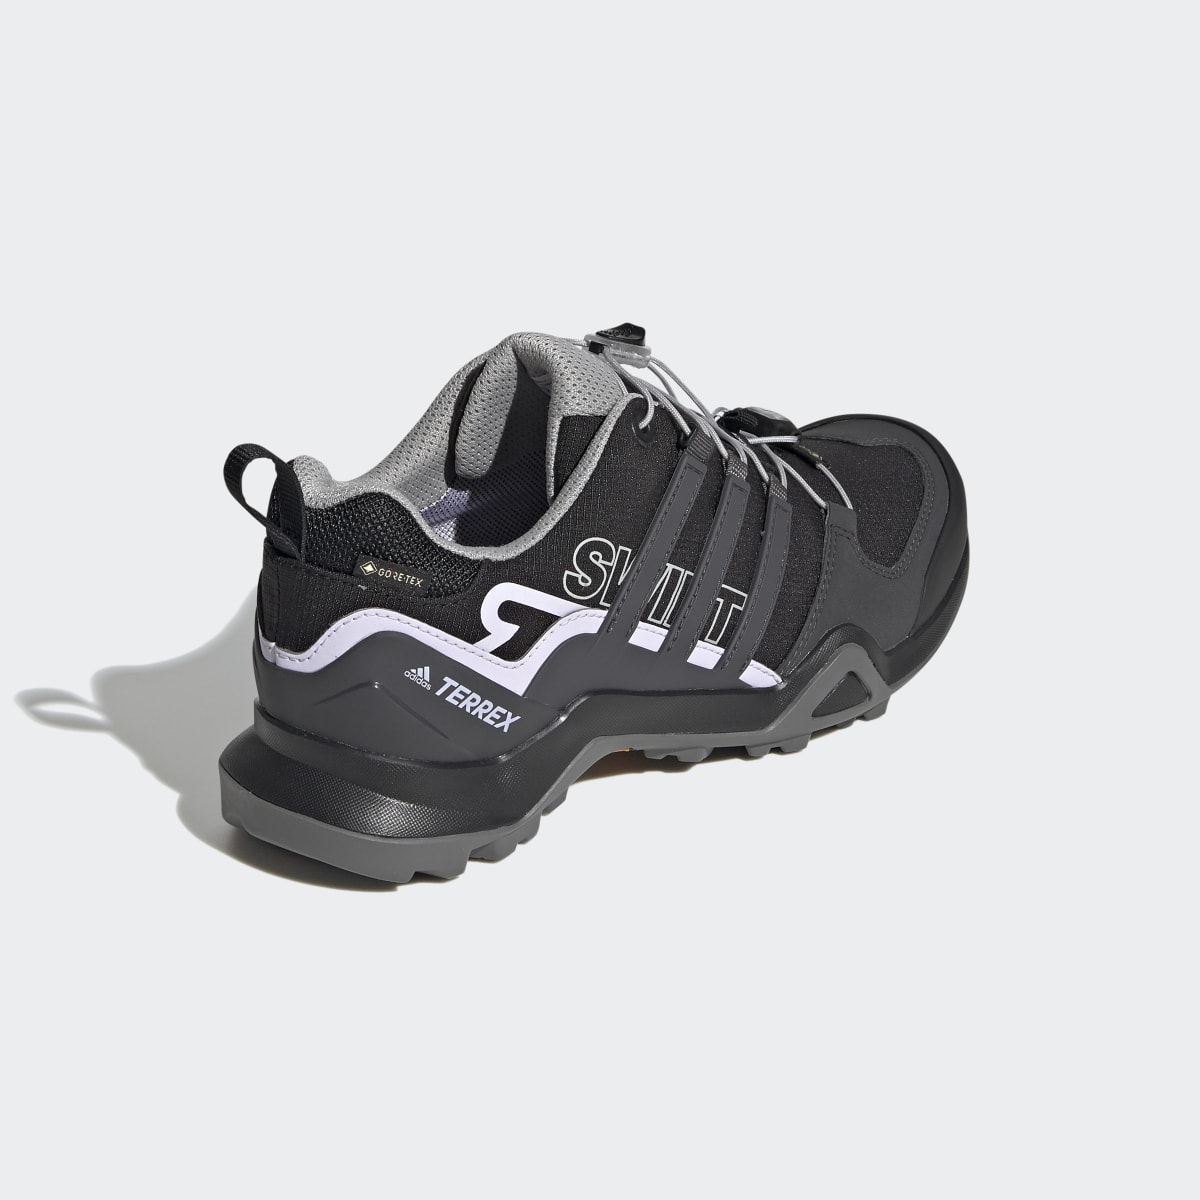 Adidas Terrex Swift R2 GORE-TEX Hiking Shoes. 7